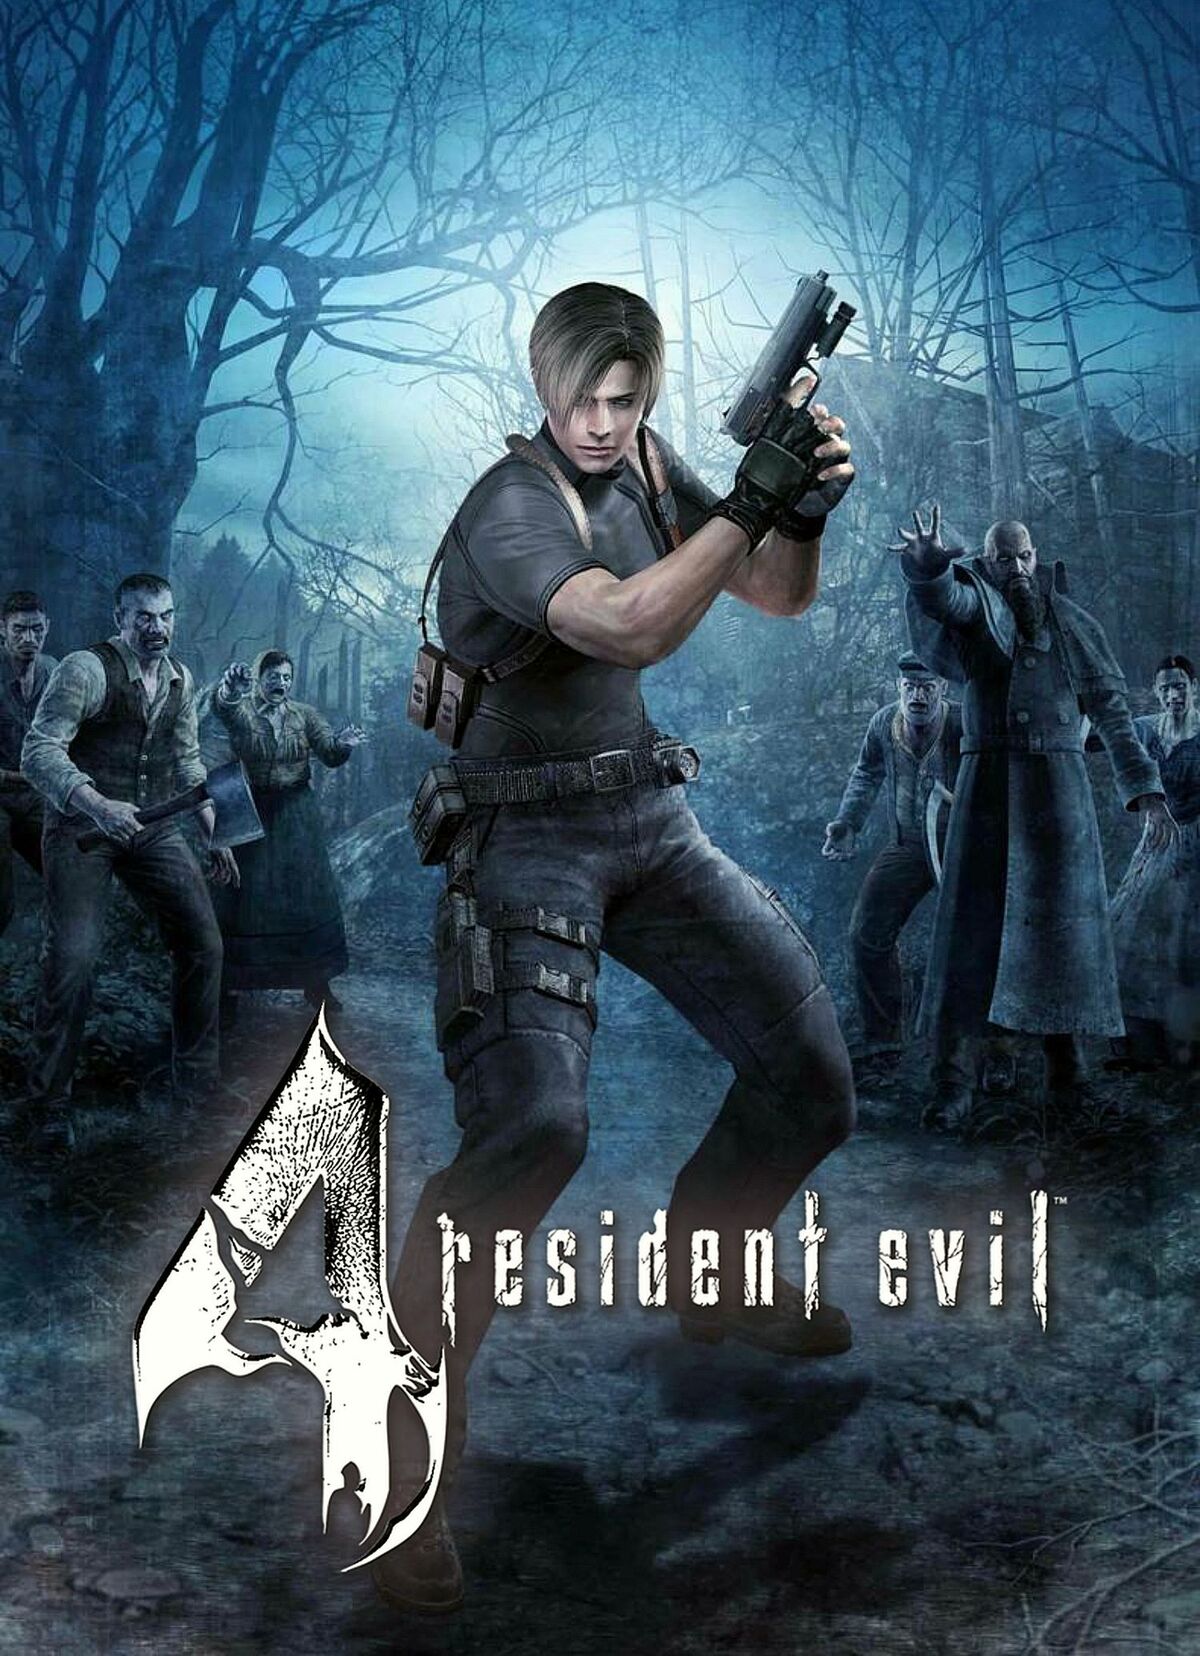 Is Resident Evil 4 co-op?